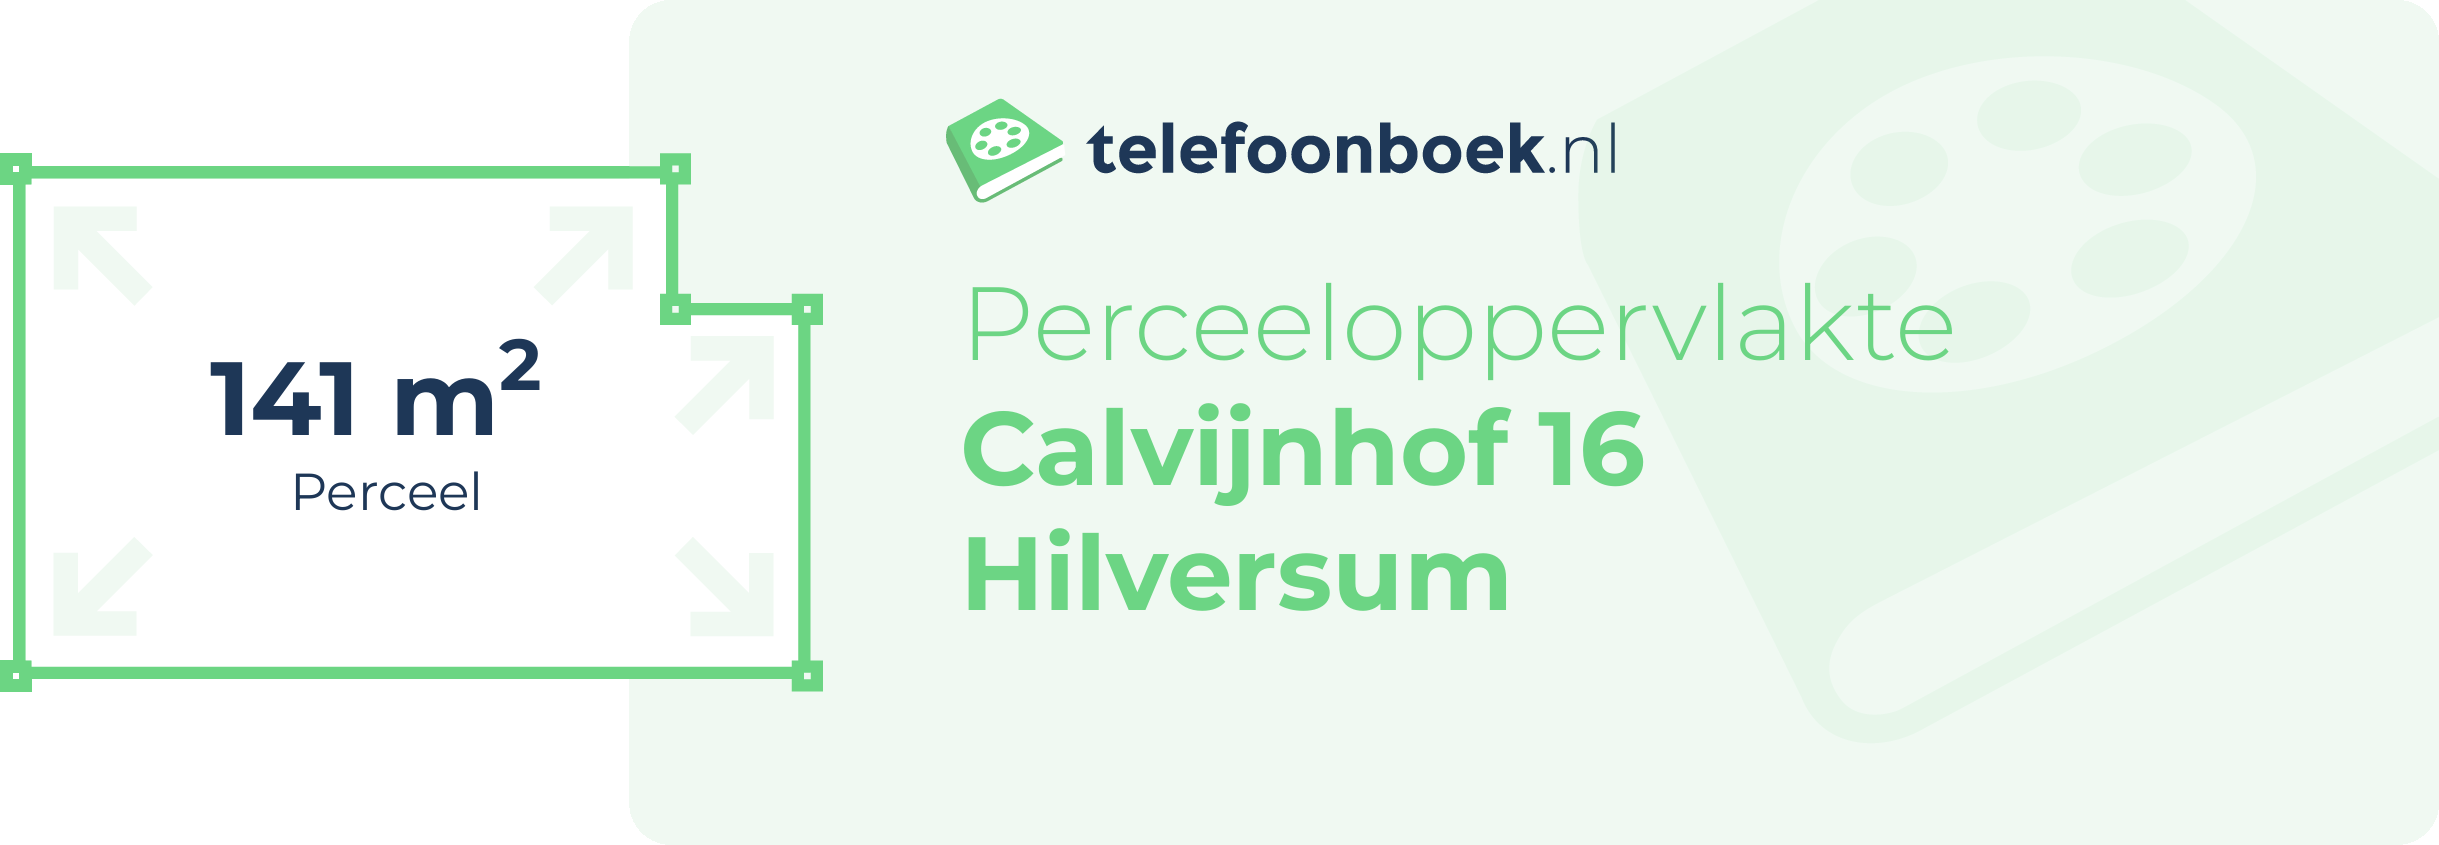 Perceeloppervlakte Calvijnhof 16 Hilversum